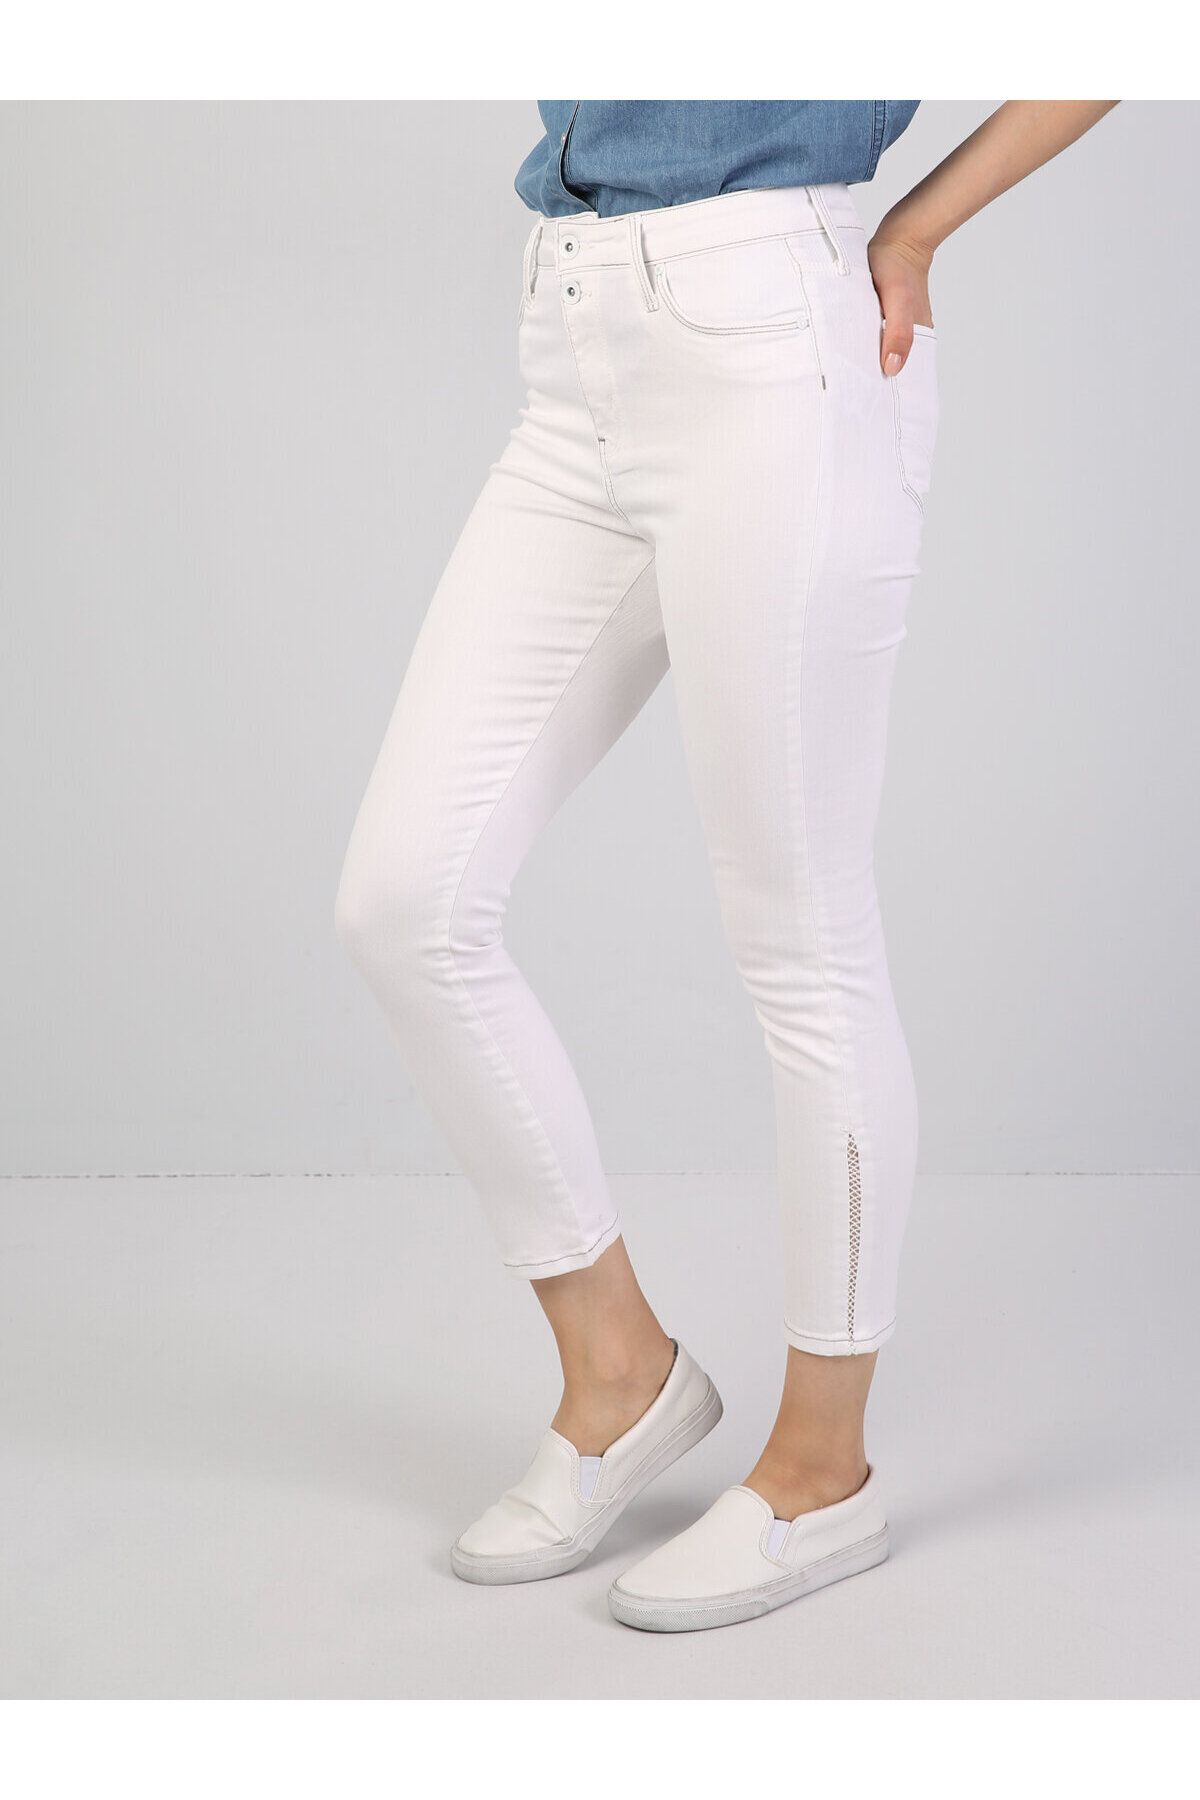 Colin’s 760 Dıana Yüksek Bel Dar Paça Super Slim Fit Beyaz Kadın Jean Pantolon